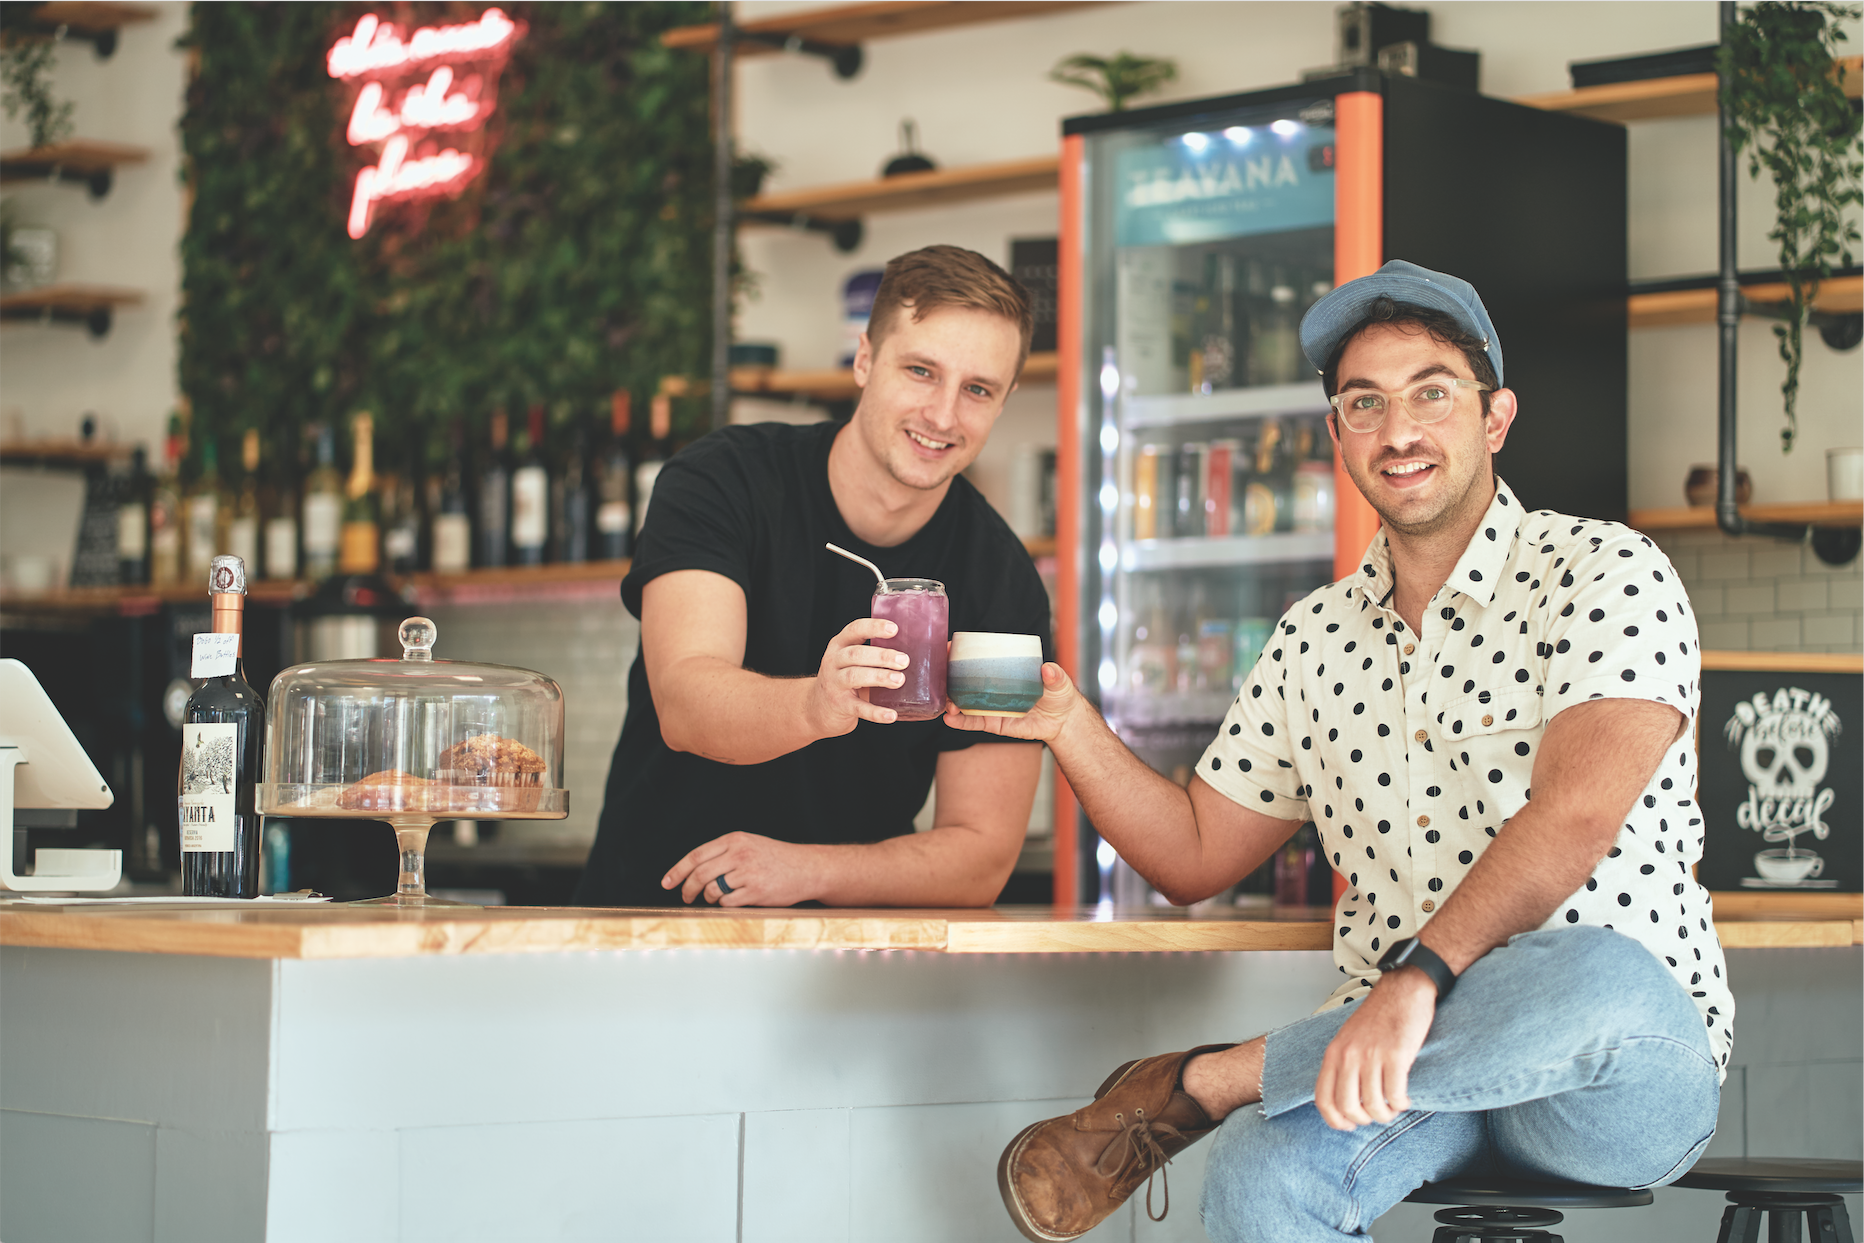 Ben Greene and Keith Nasewicz of Oscura Cafe cheersing to caffeine. Photography by Wyatt Kostygan.